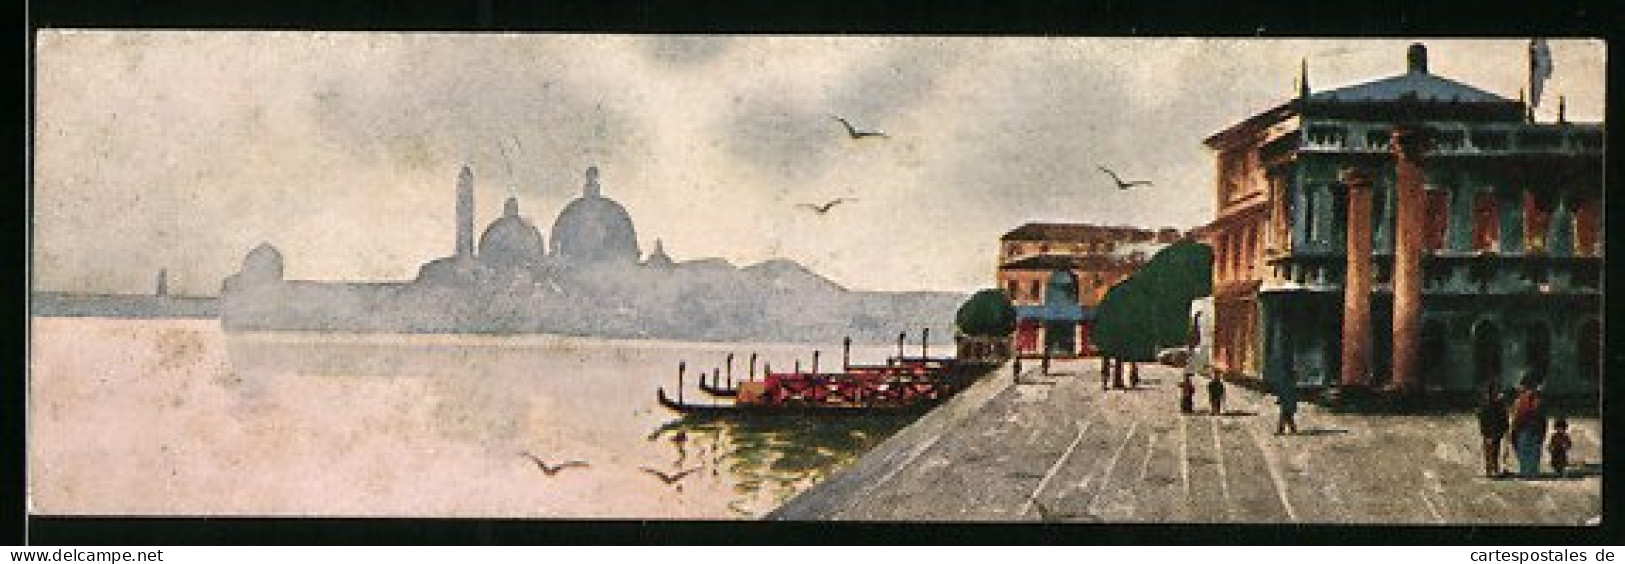 Mini-Cartolina Venezia, Molo  - Venezia (Venedig)